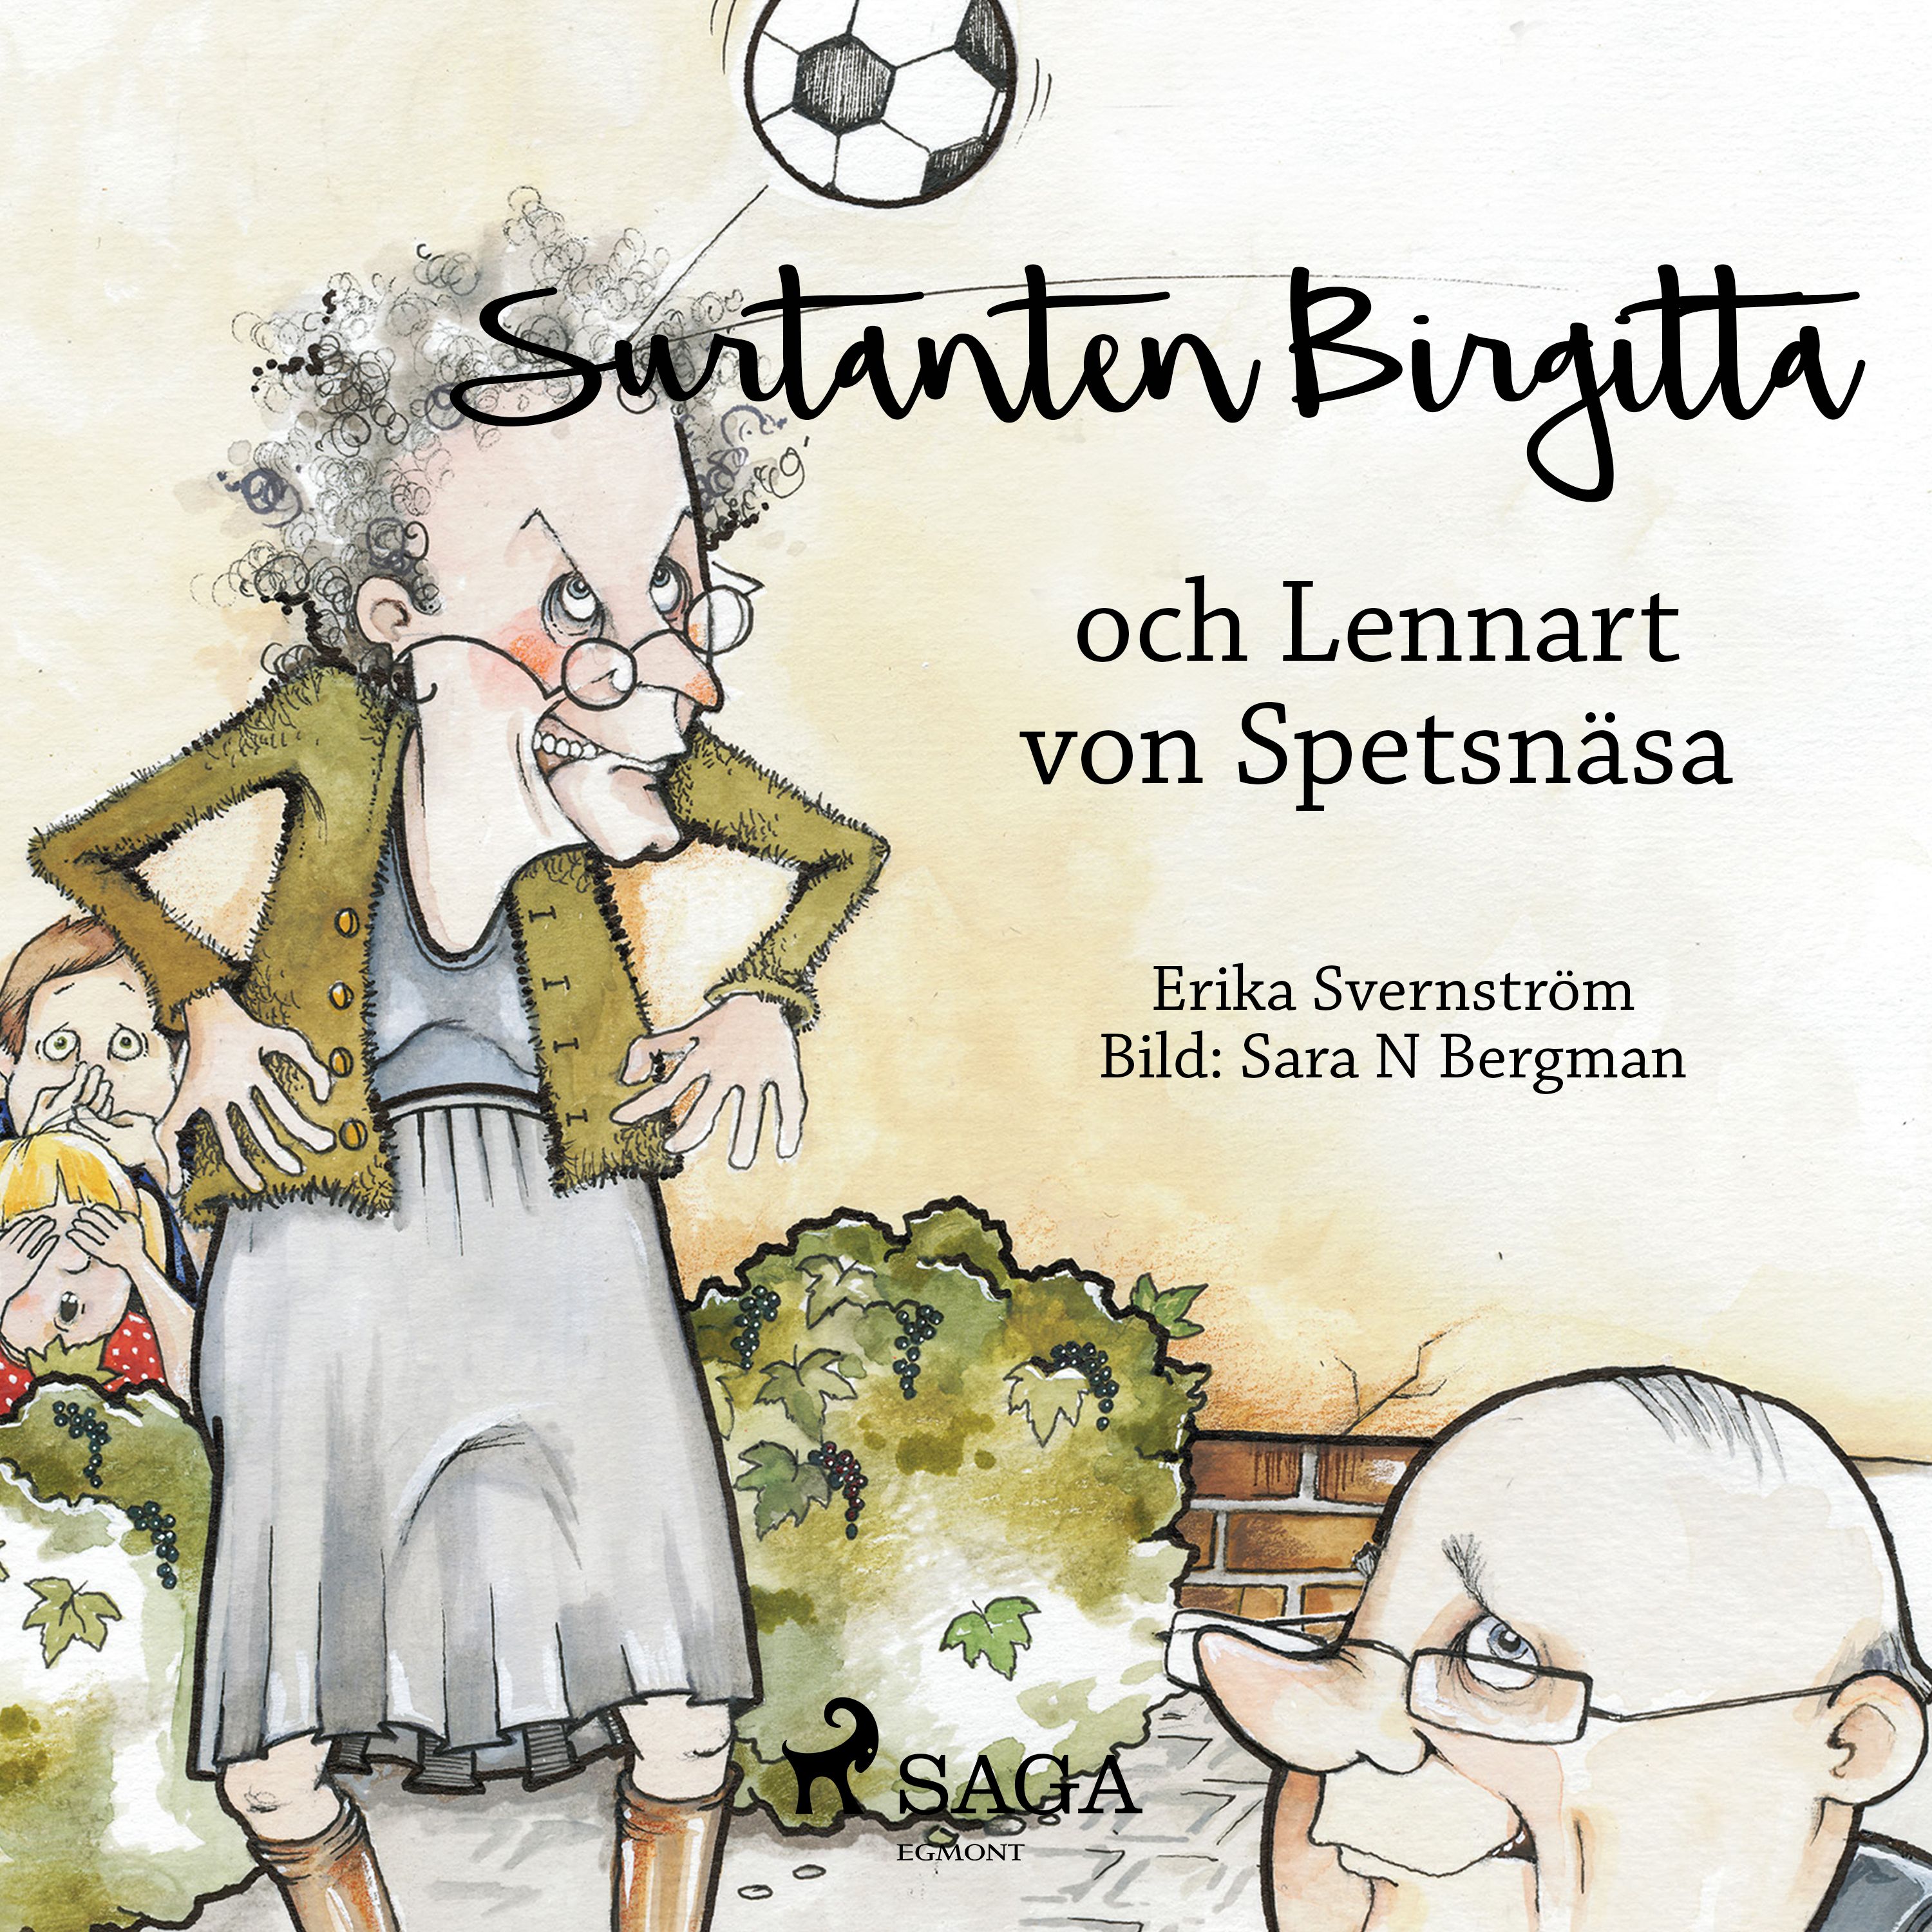 Surtanten Birgitta och Lennart von Spetsnäsa, audiobook by Erika Svernström